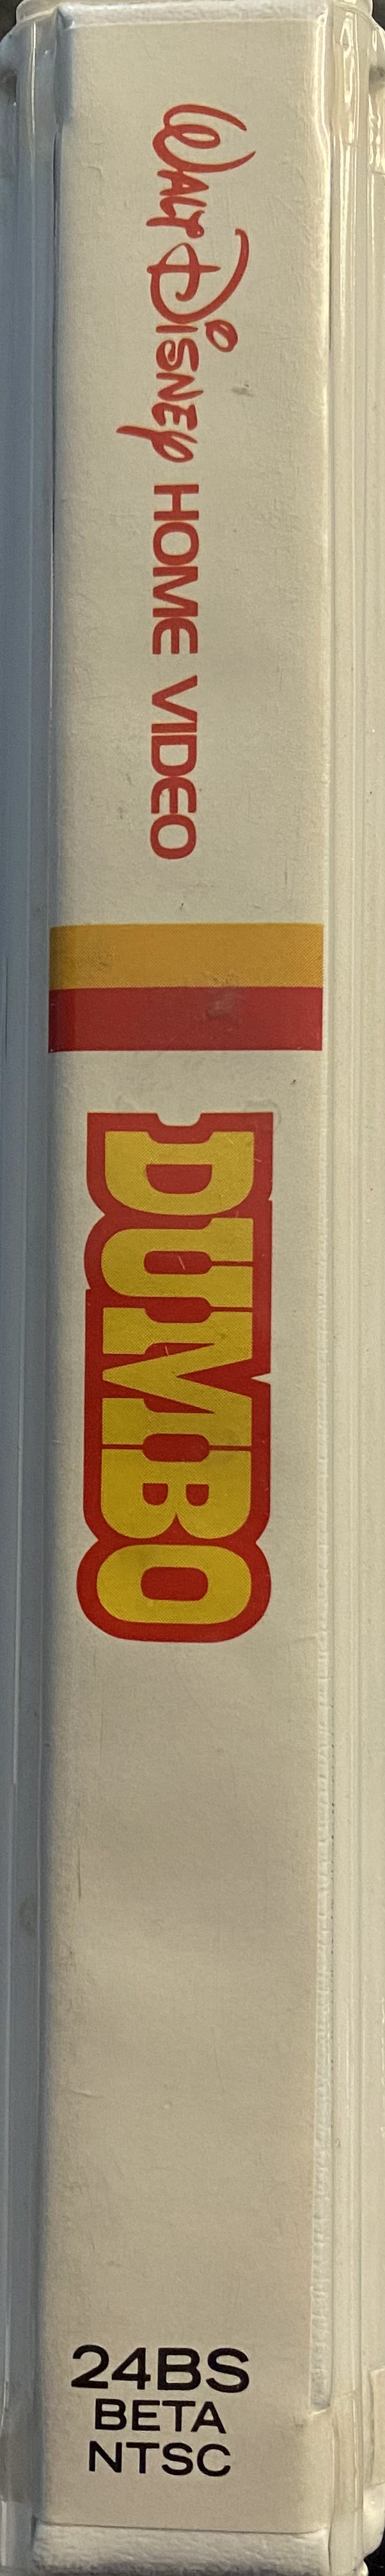 Dumbo (1981)(RENTAL)